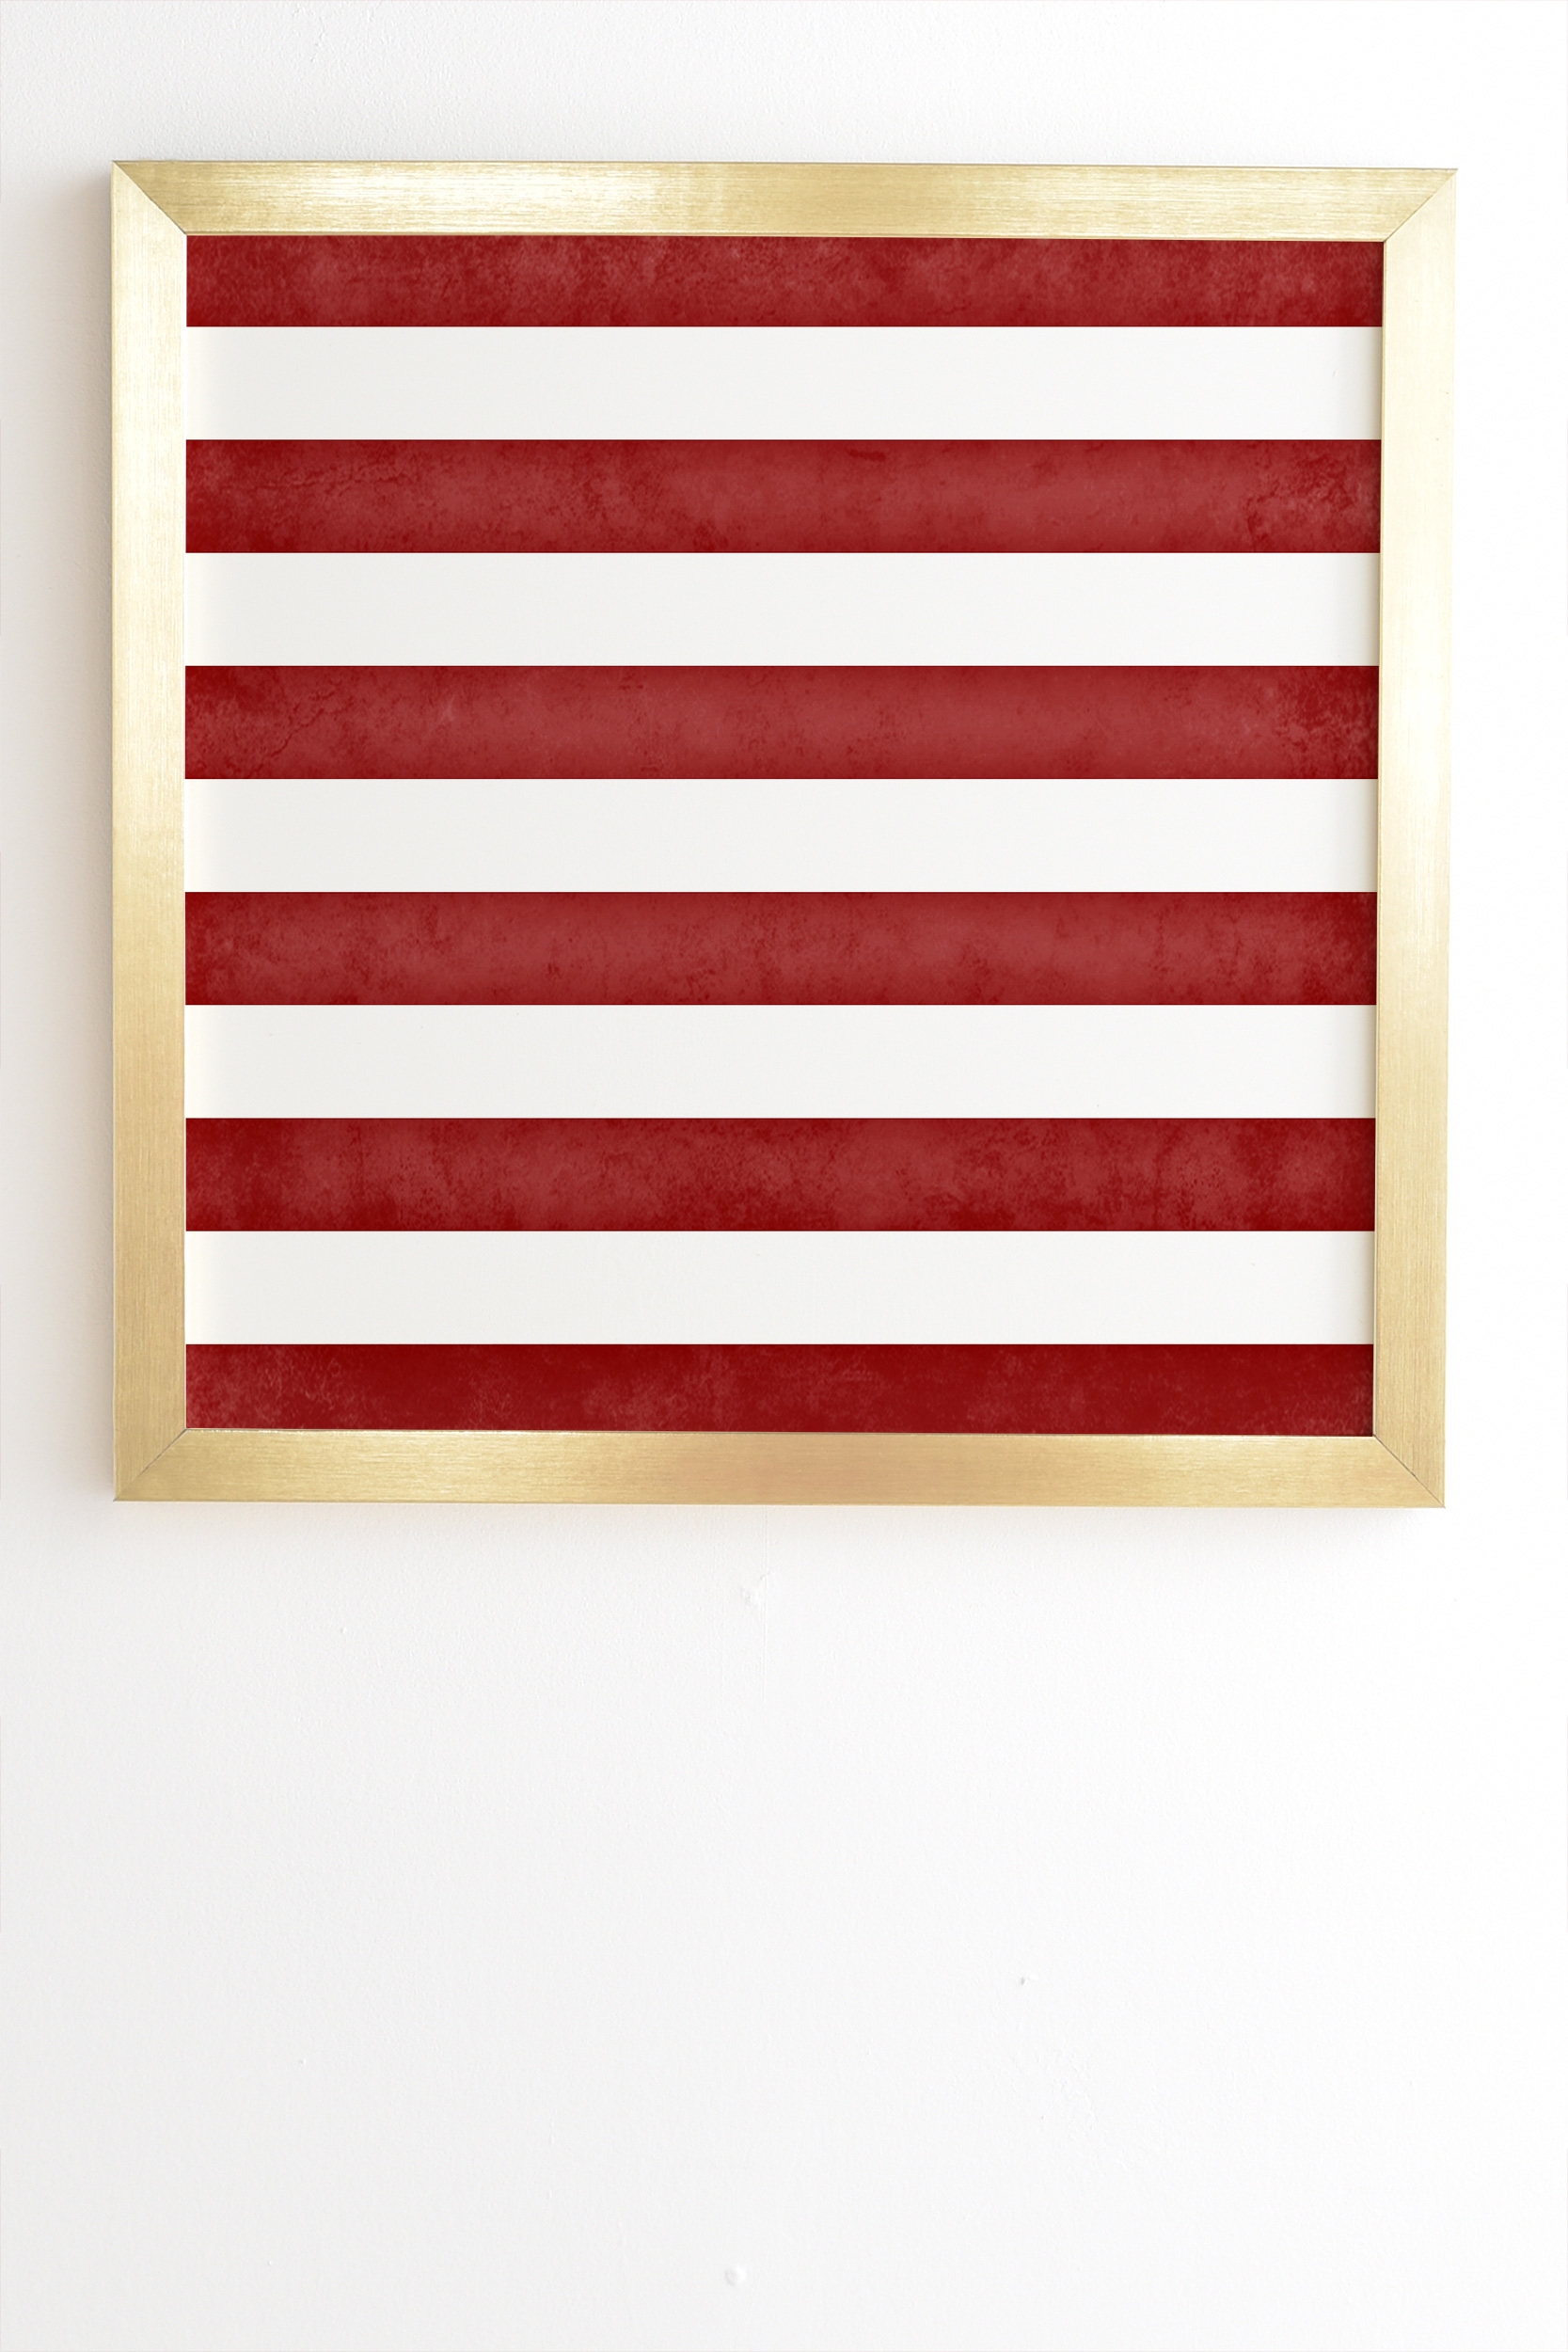 Farmhouse Shabby Stripes Red by Monika Strigel - Framed Wall Art Basic Gold 8" x 9.5" - Image 1